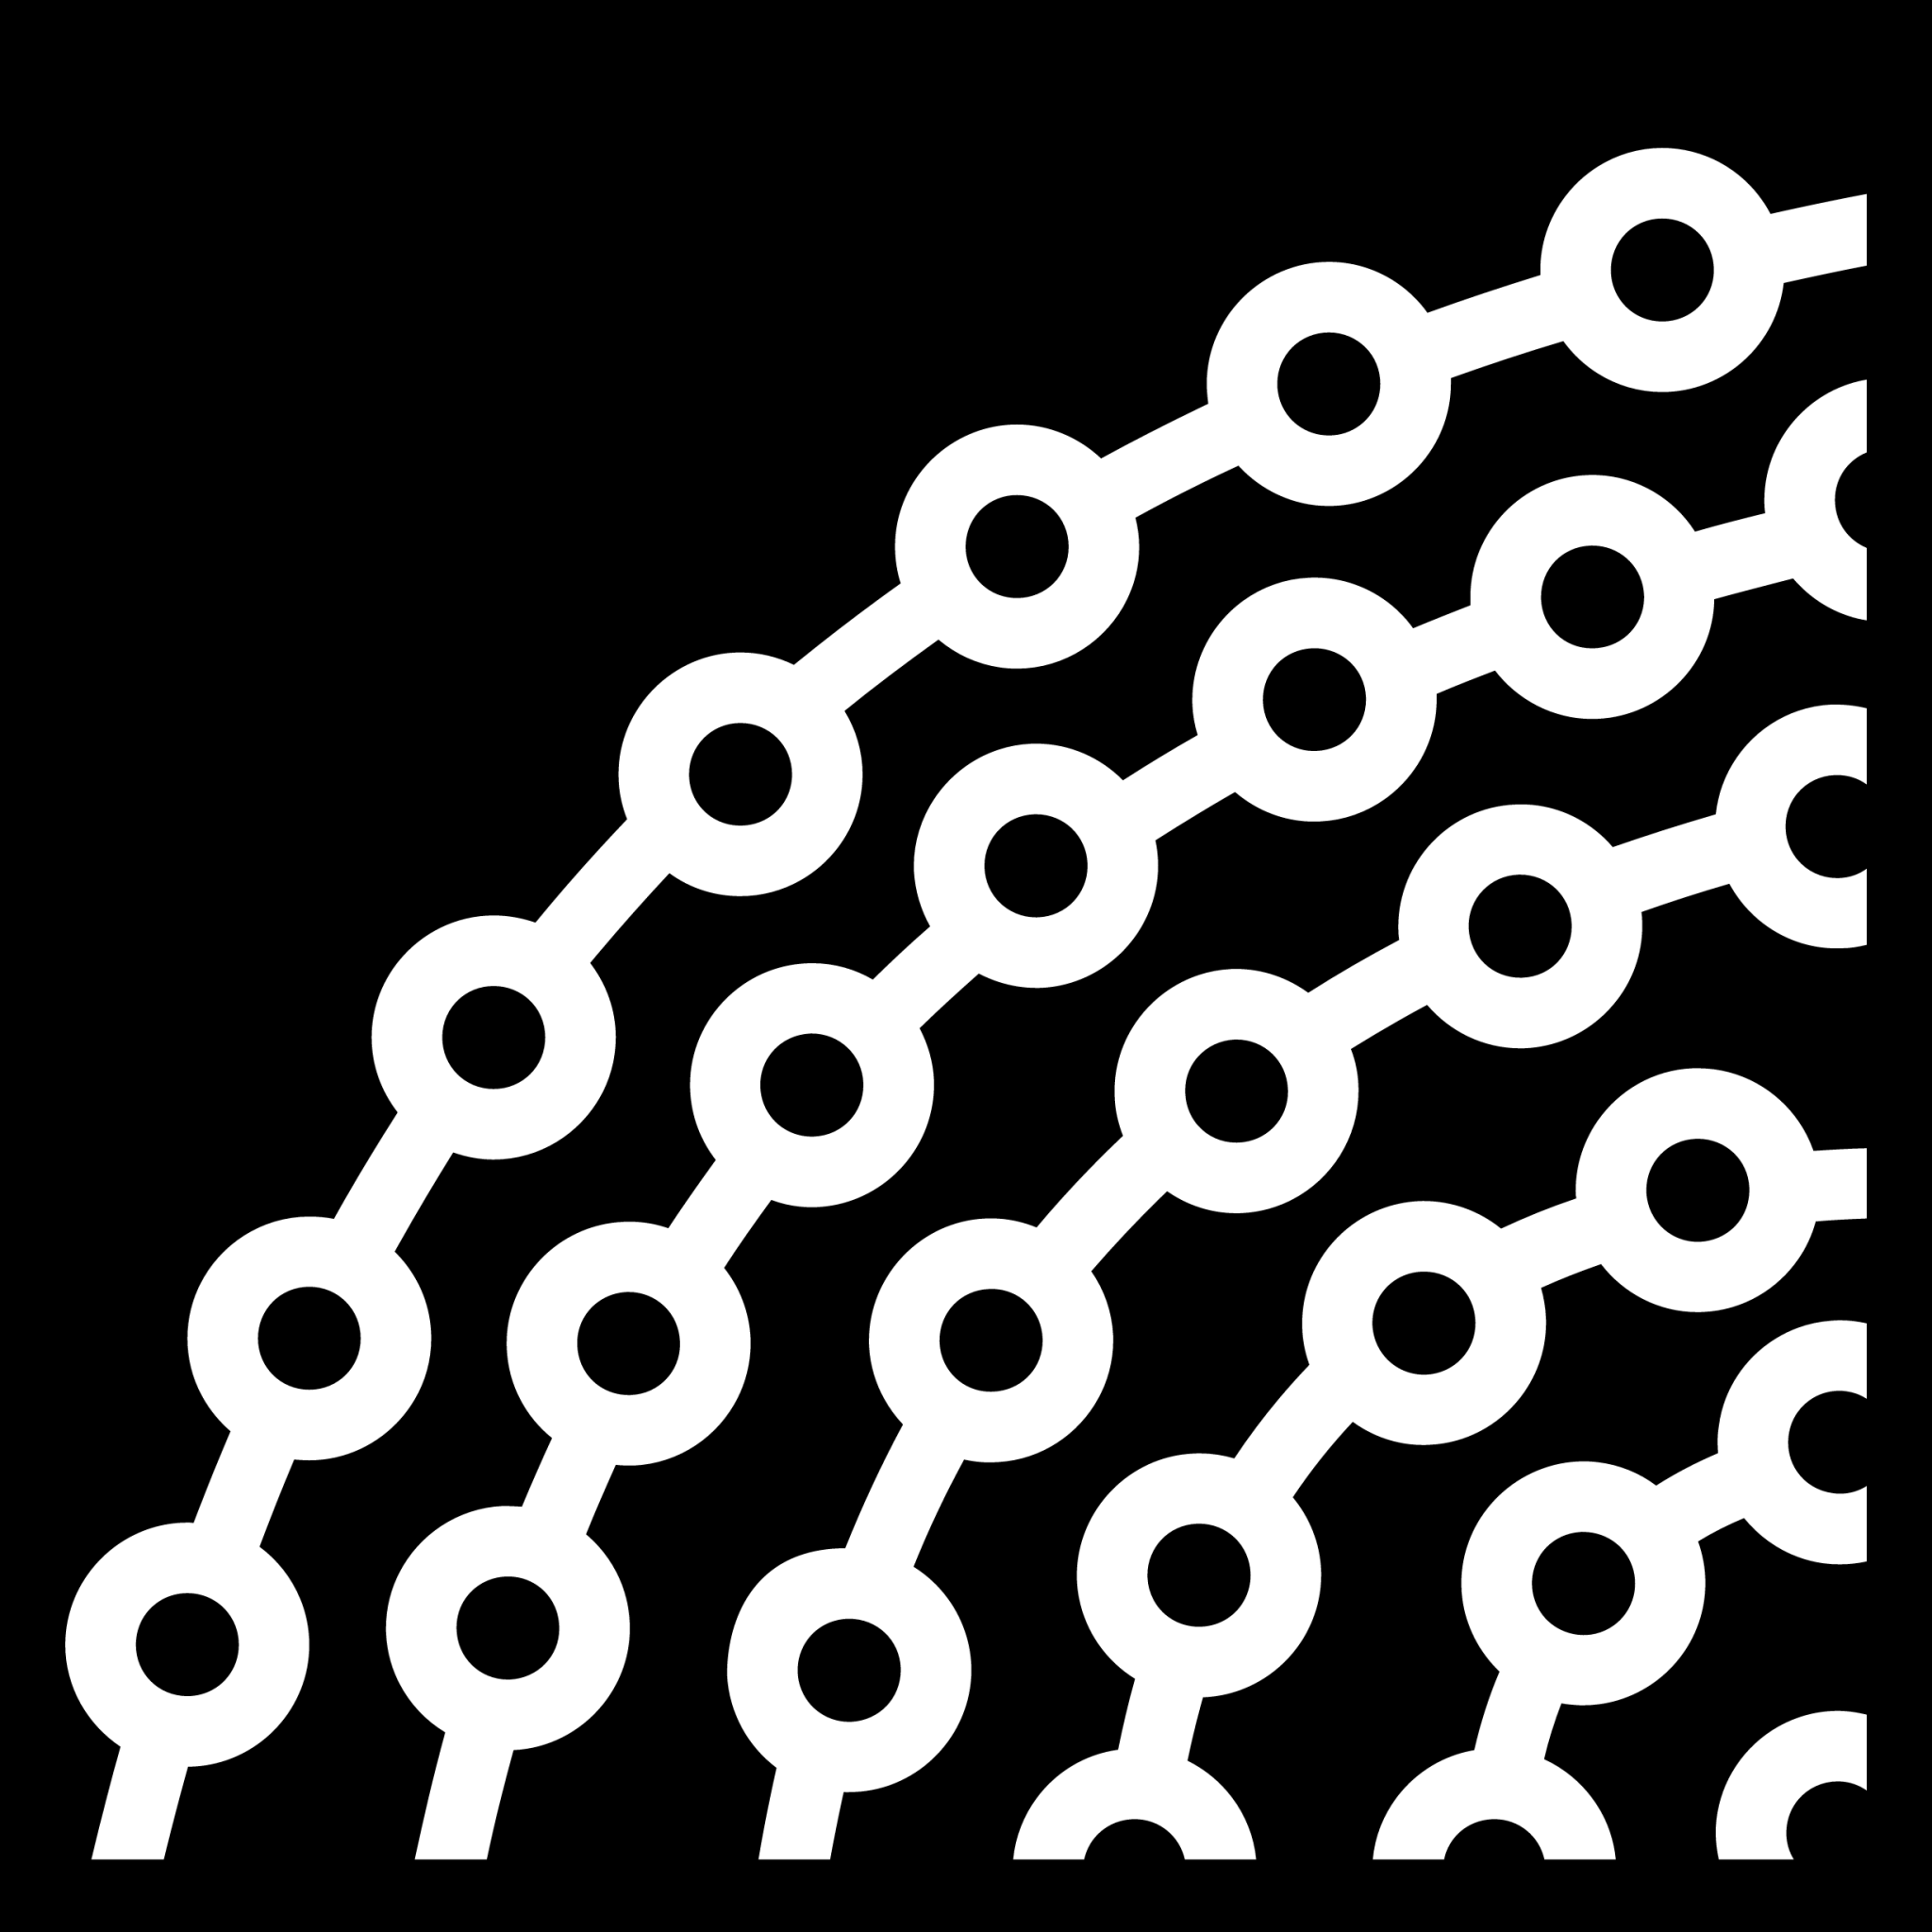 wavy chains icon